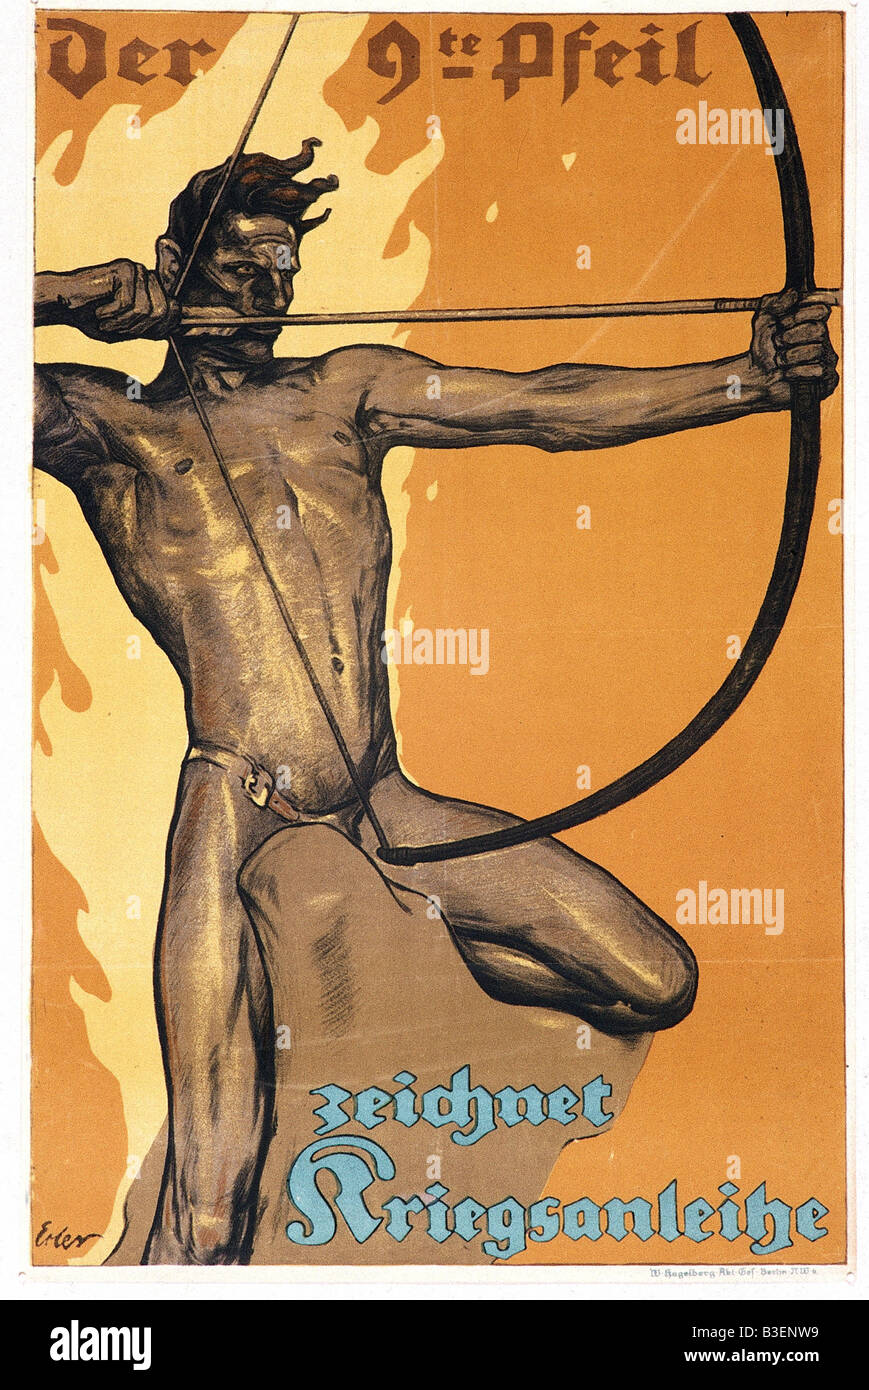 events, First World War / WWI, propaganda, poster 'Der 9te Pfeil - Zeichnet Kriegsanleihe' (The 9th arrow - Buy war bonds!), draft by Fritz Erler, Germany, September 1918, Stock Photo